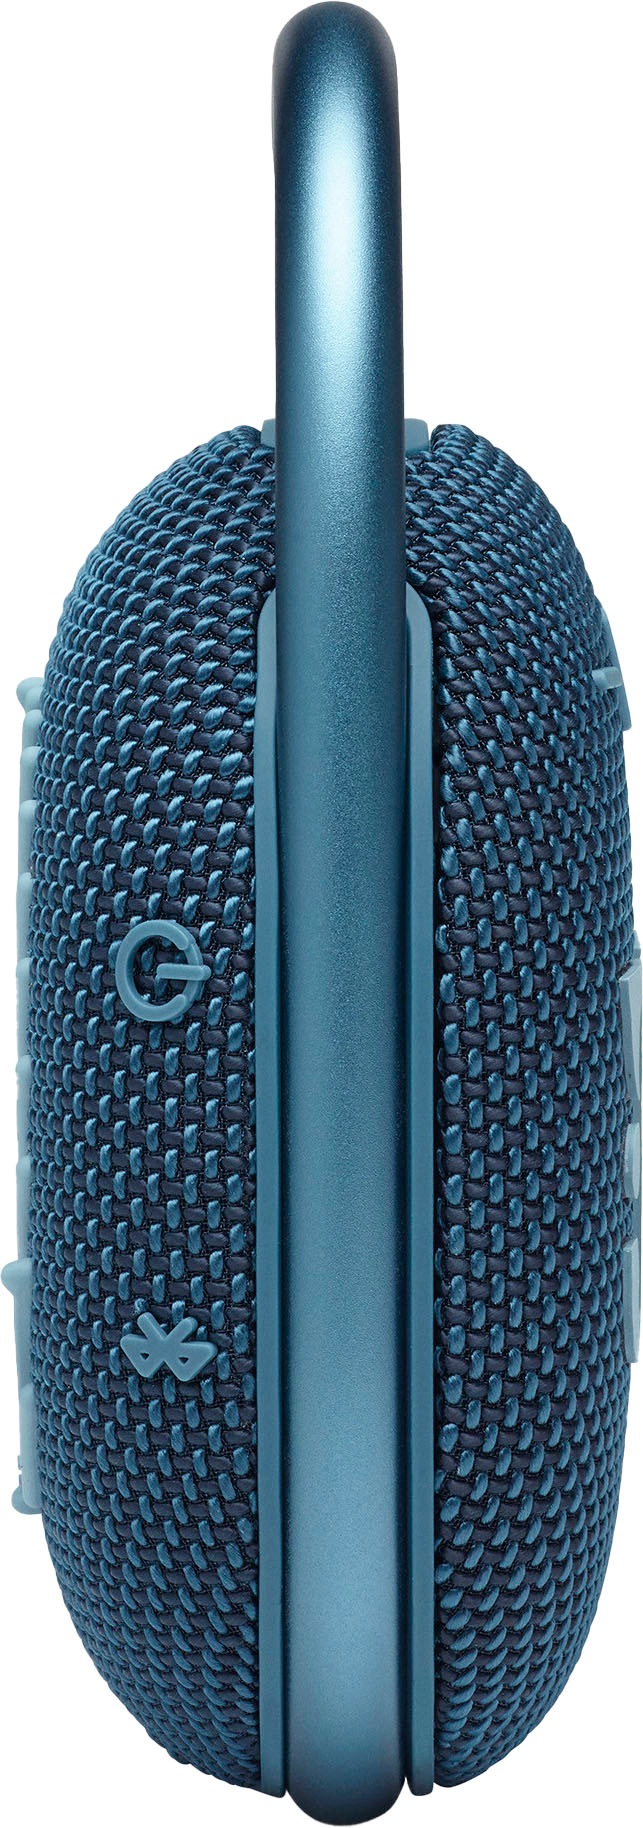 Portable Speaker - JBLCLIP4BLUAM Blue CLIP4 Bluetooth Buy Best JBL